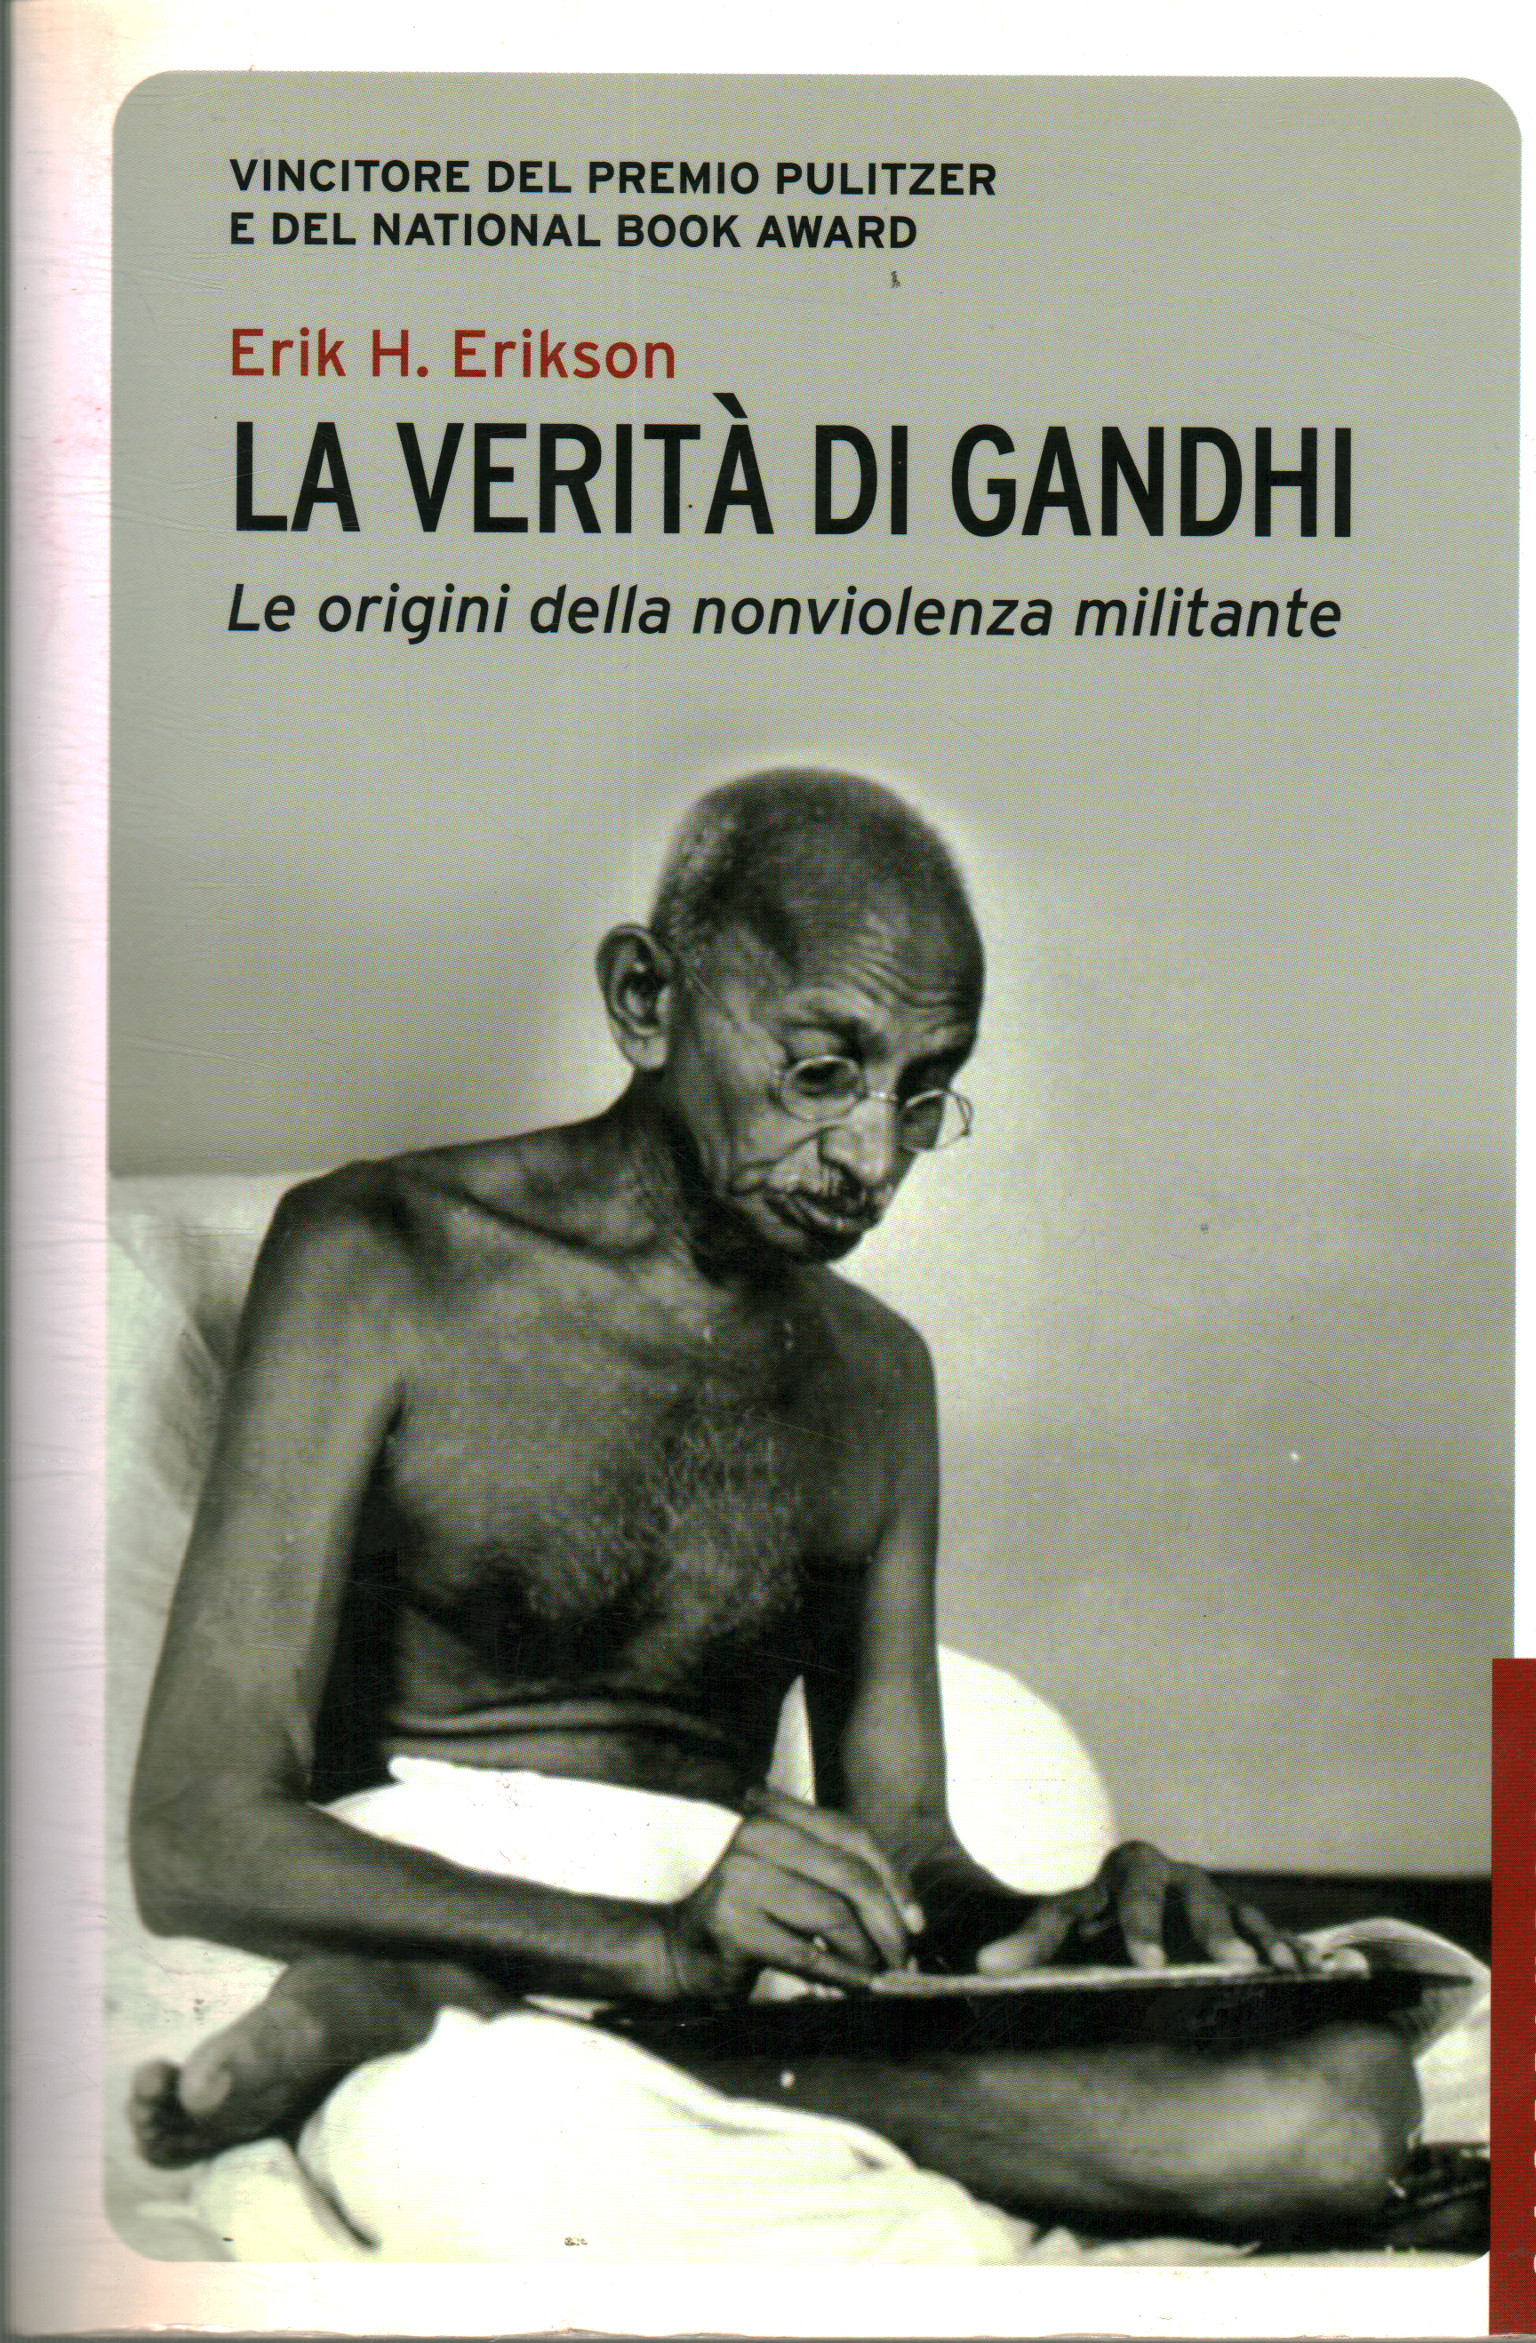 La verità di Gandhi, Erik H. Erikson